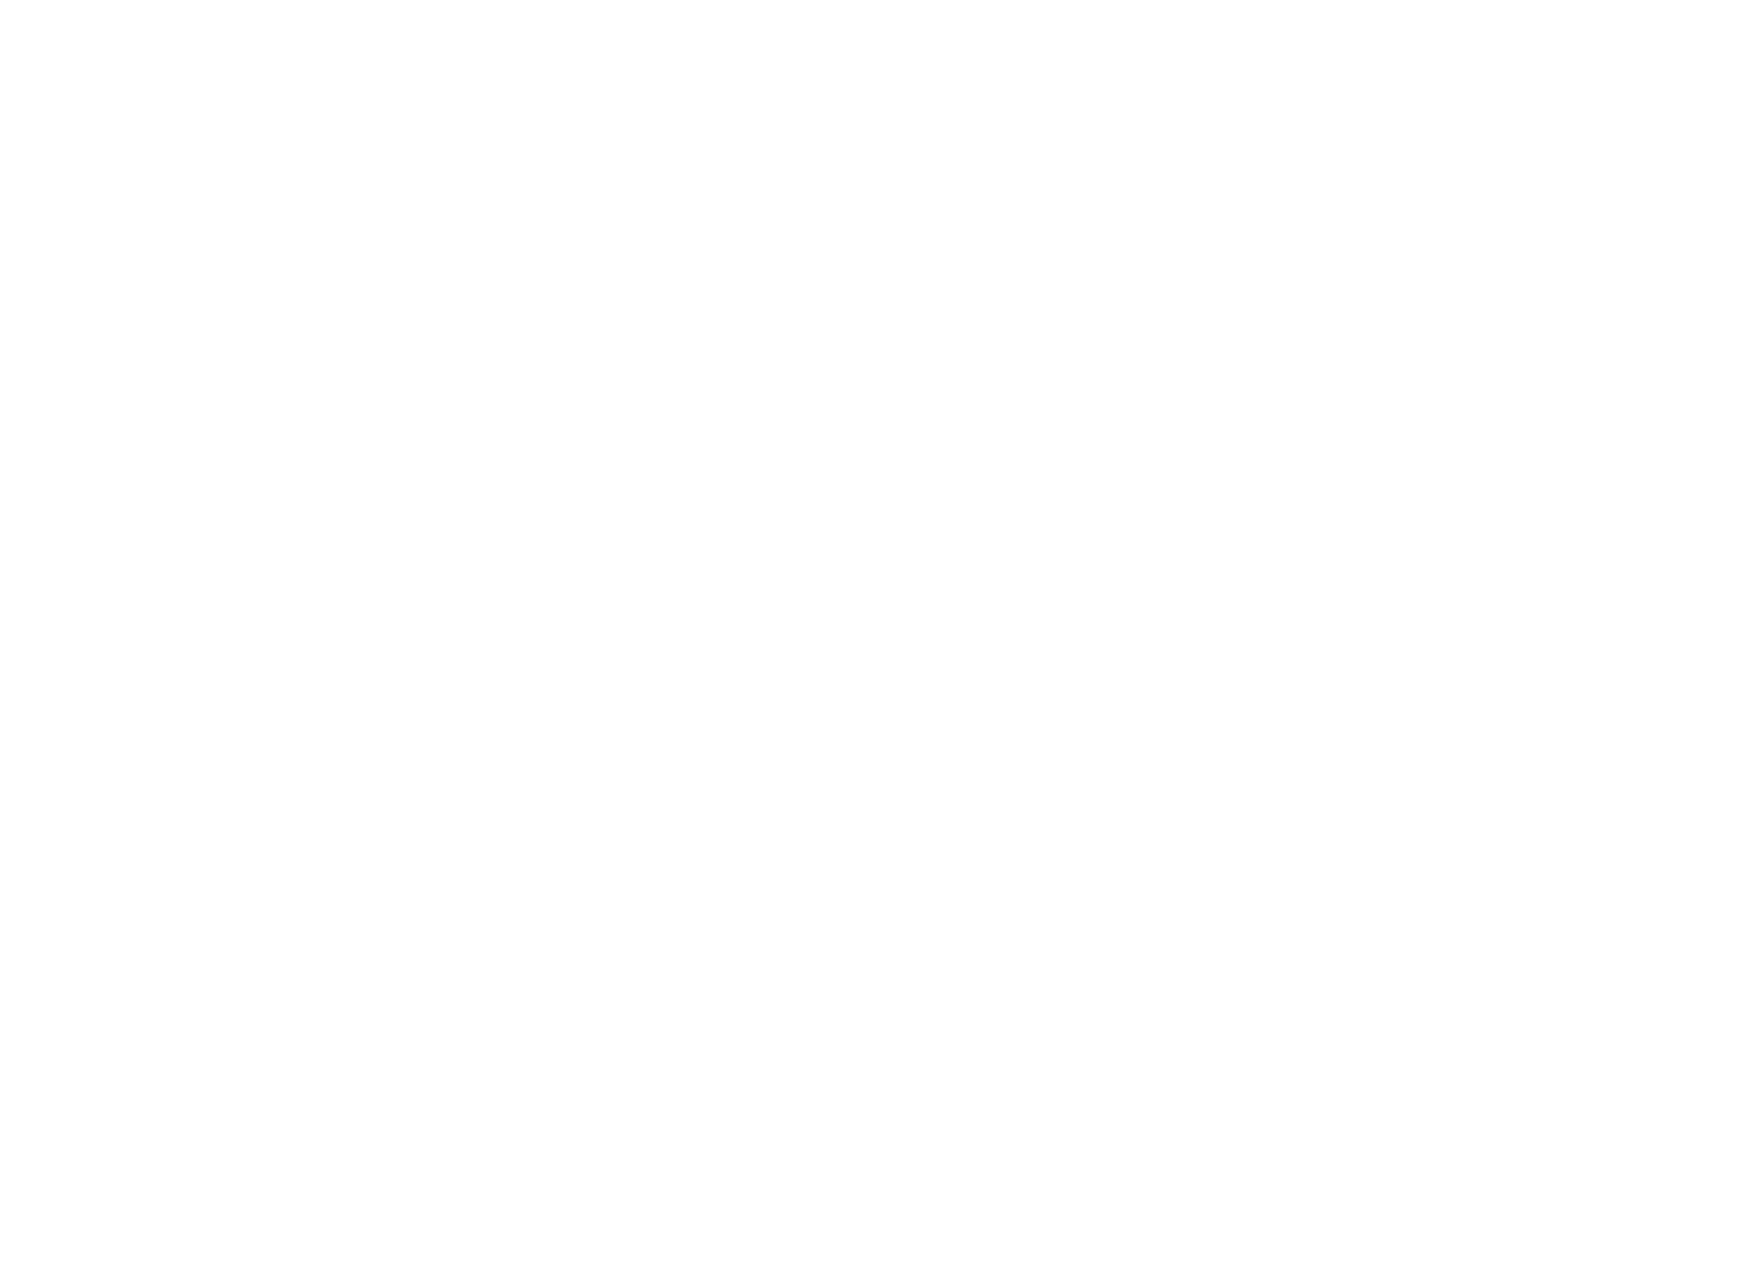 Venn Valley Vineyard